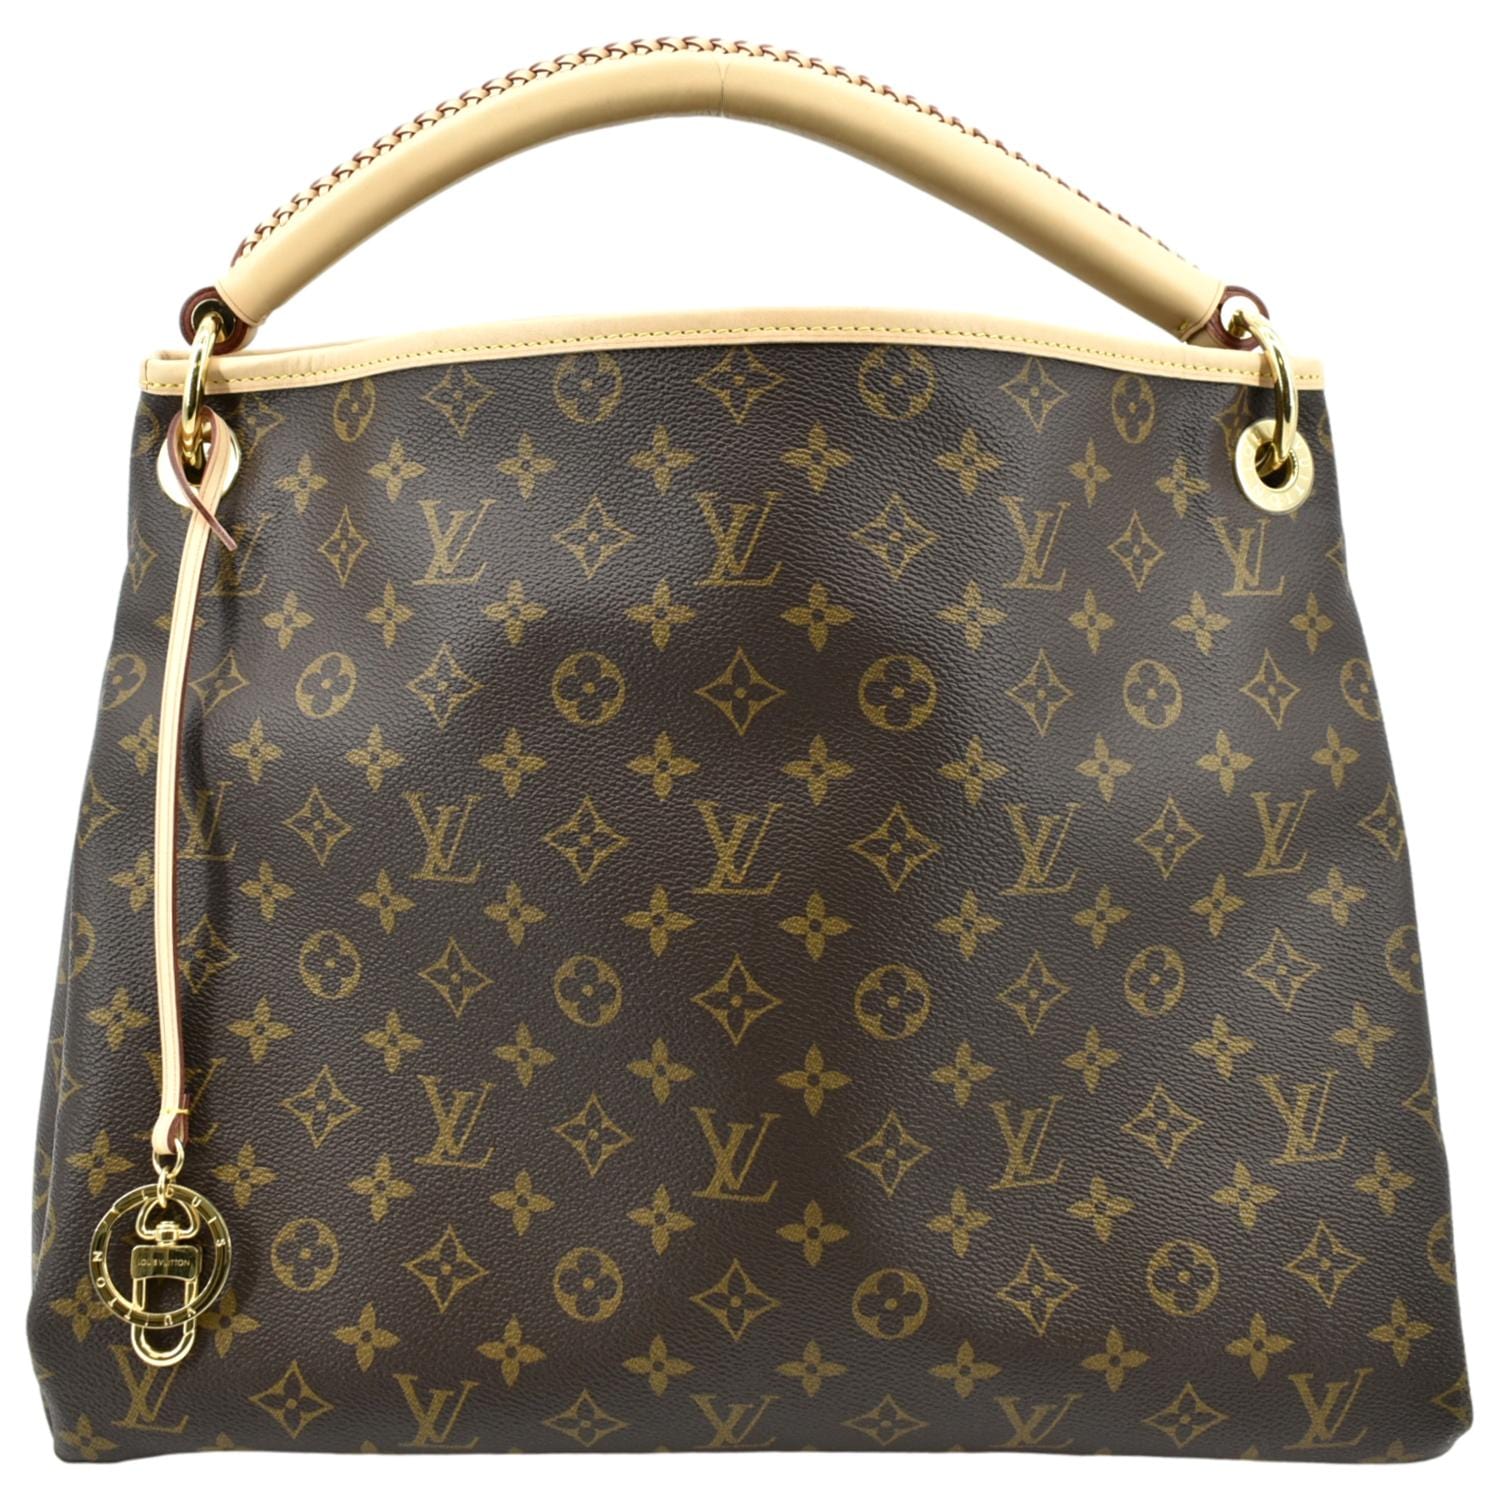 Authentic Louis Vuitton Monogram Artsy MM Hobo Shoulder Handbag M40249